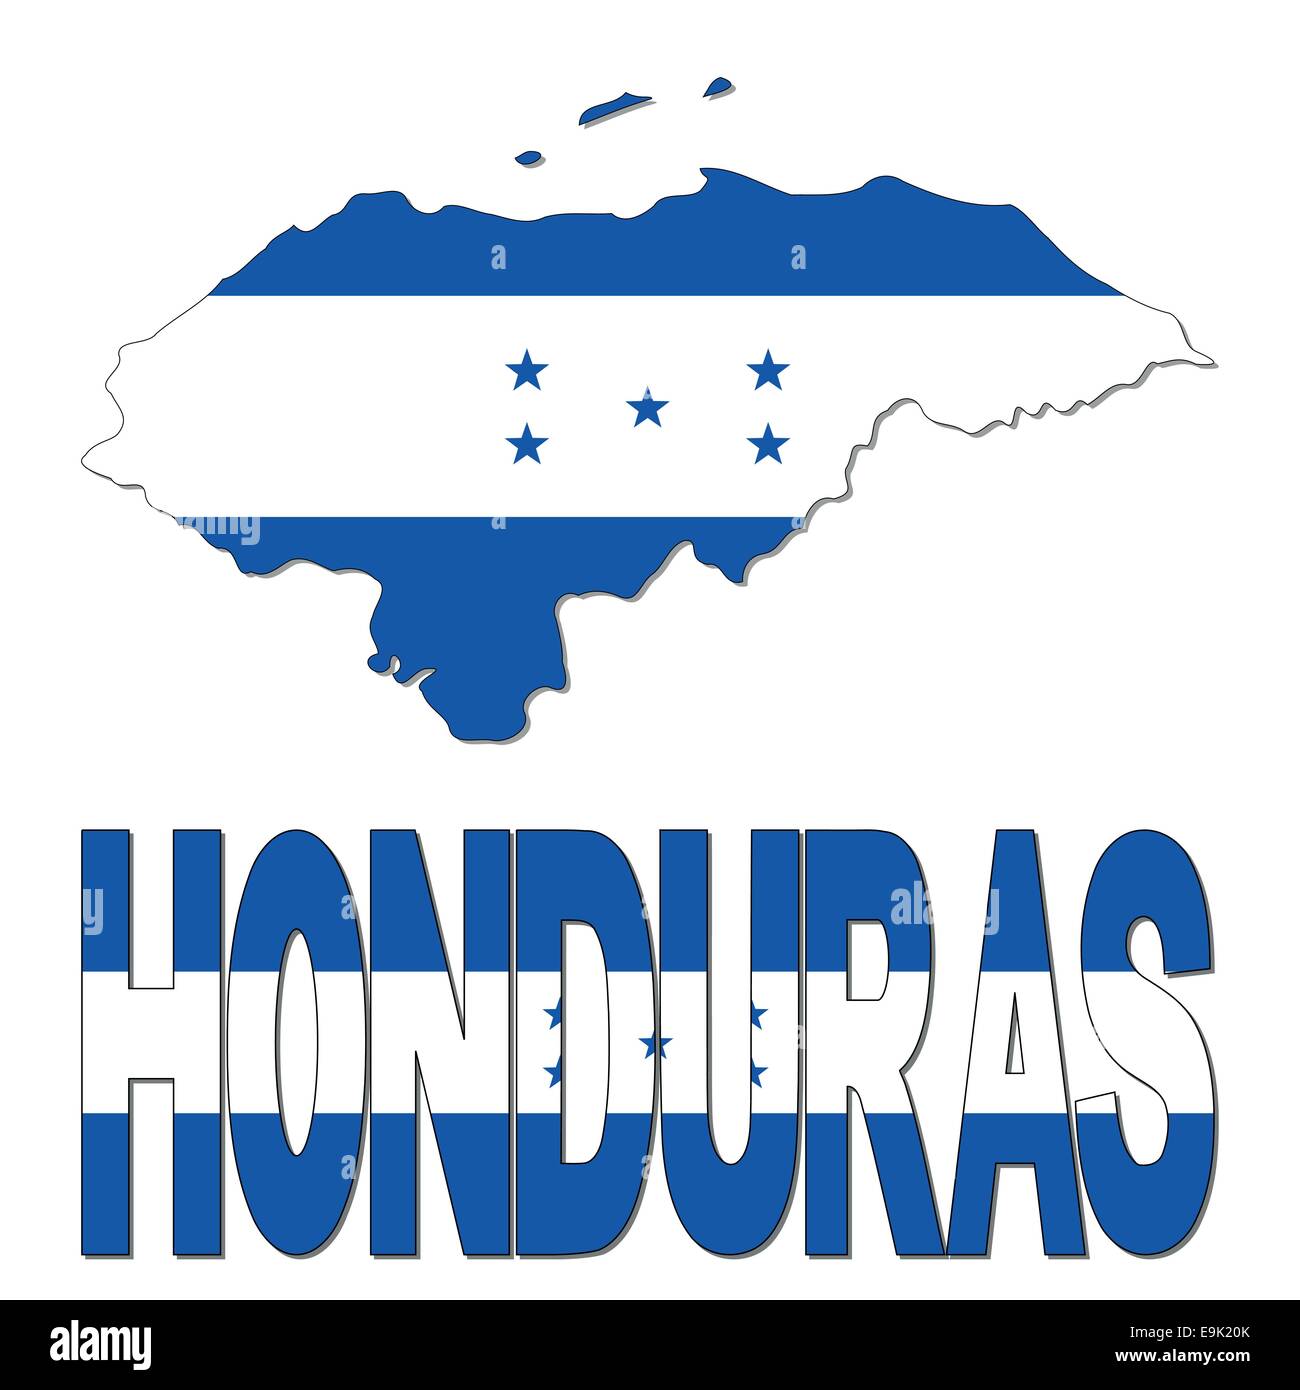 Honduras map flag and text illustration Stock Vector